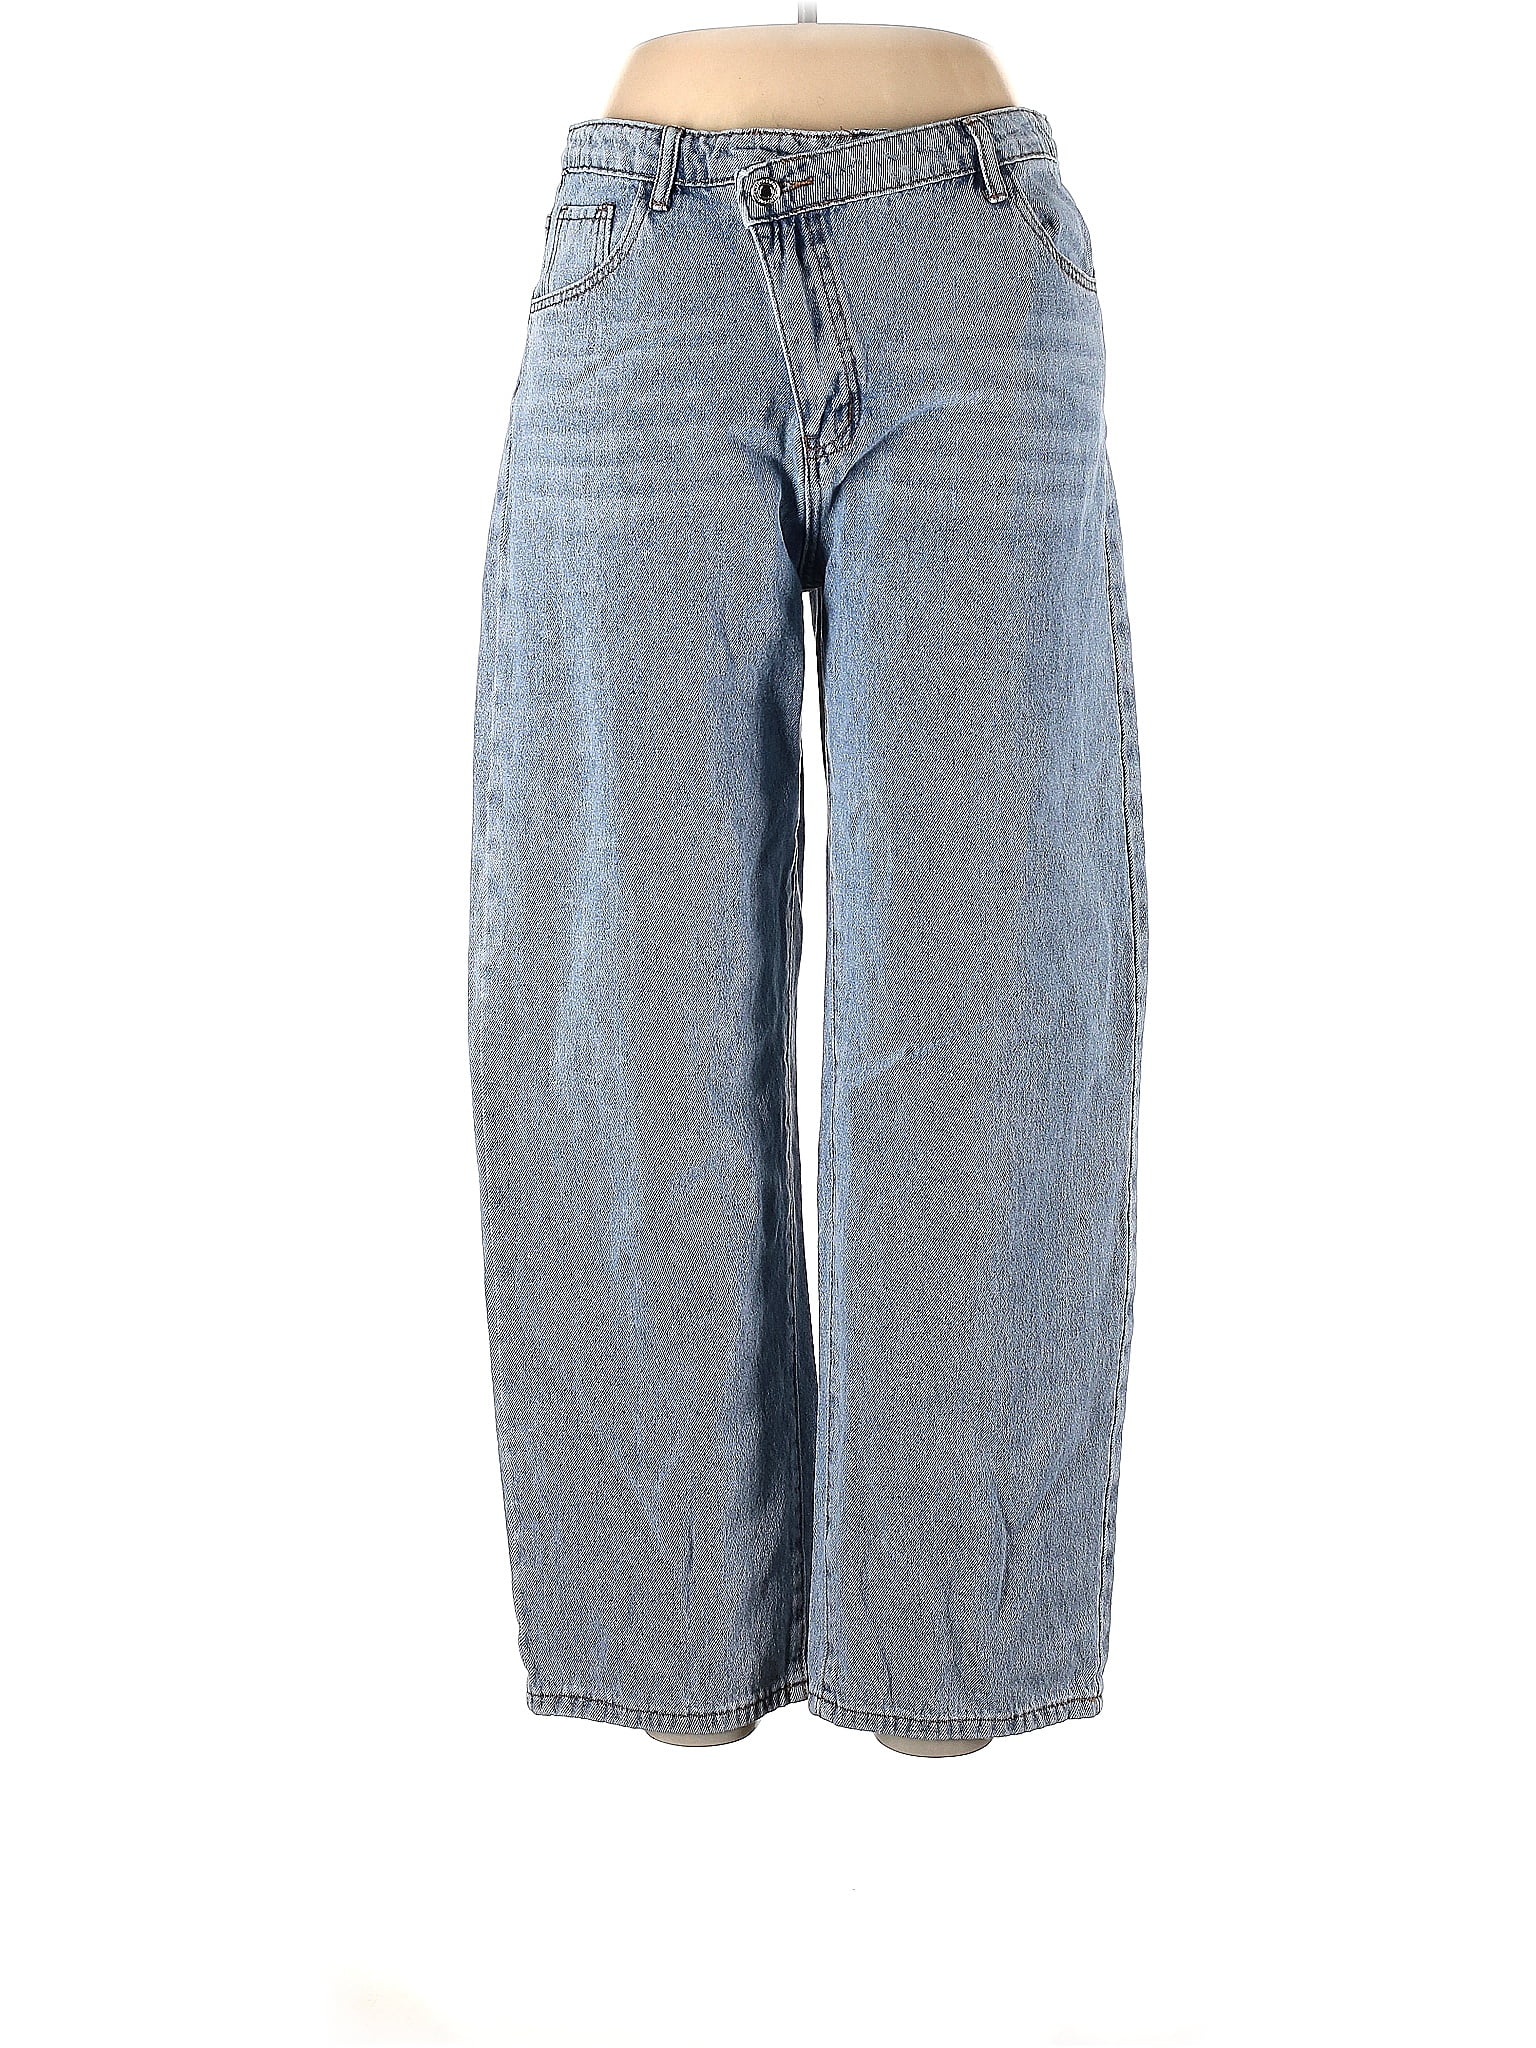 Shein 100% Cotton Blue Jeans Size L - 40% off | thredUP